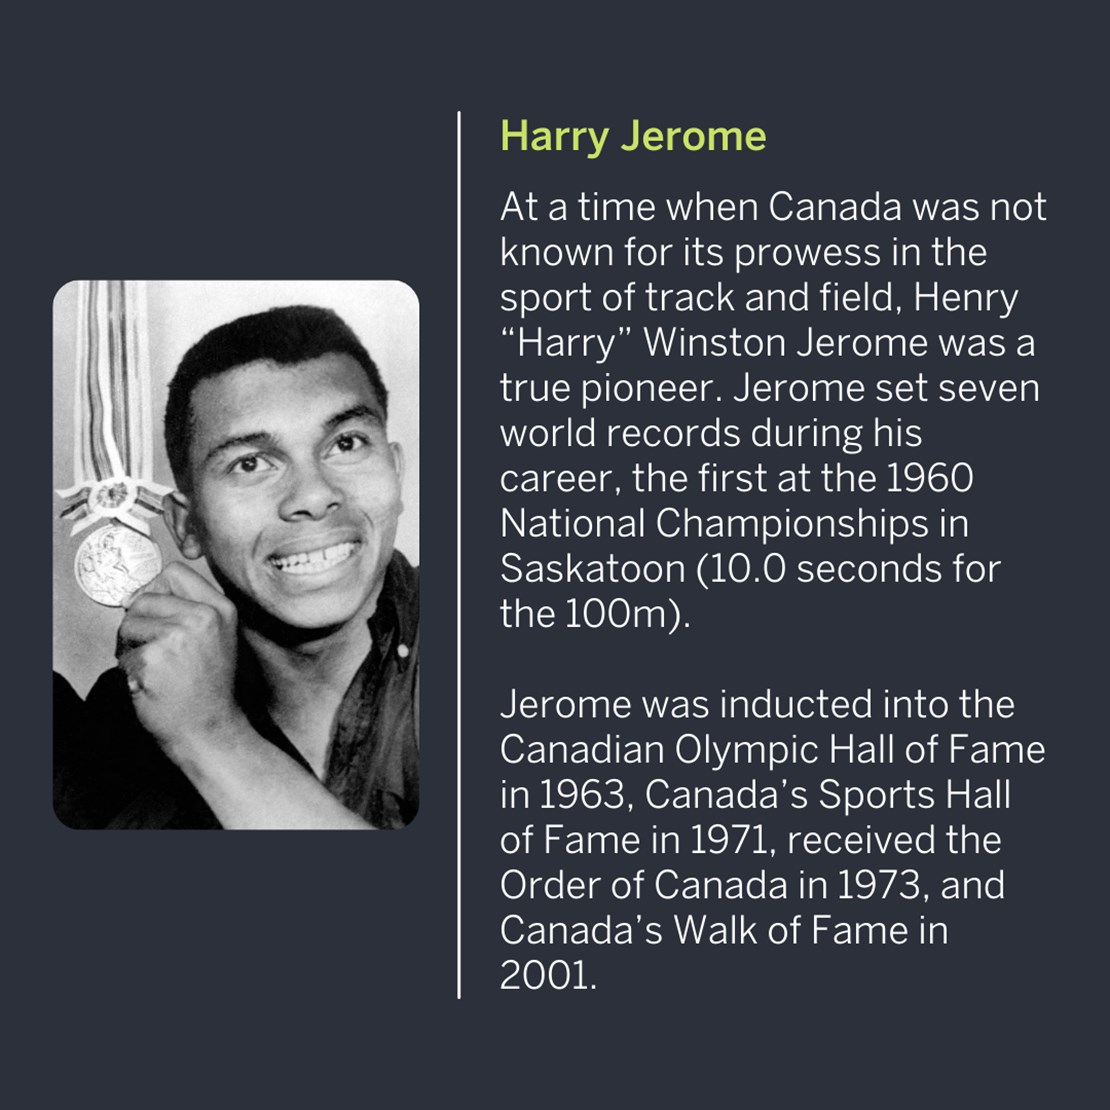 Harry Jerome